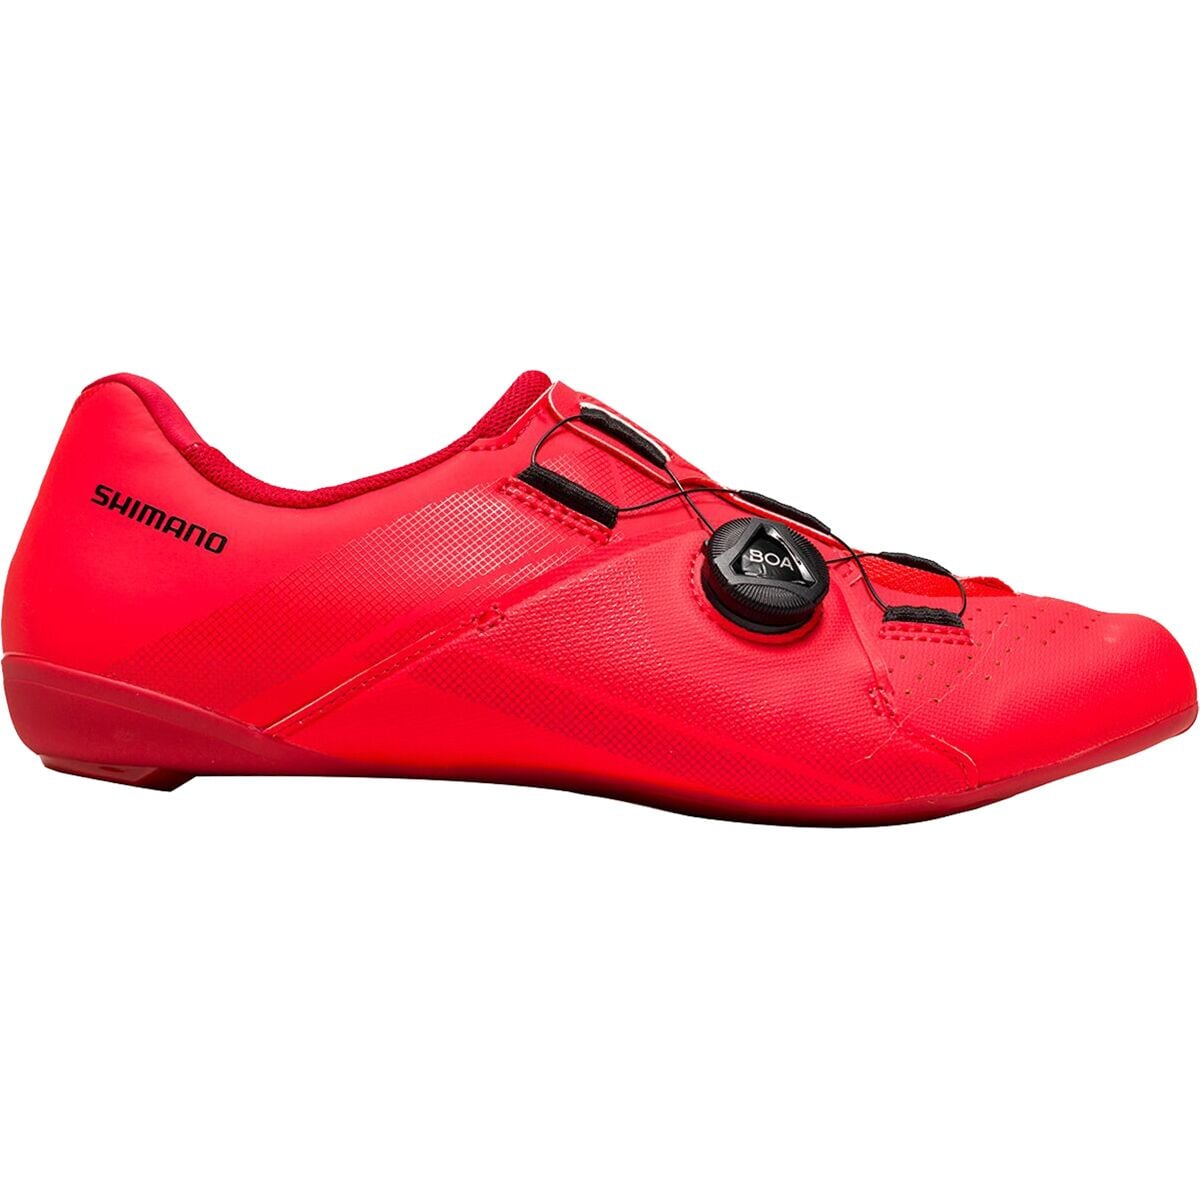 Shimano RC300 Limited Edition Cycling Shoe - Mens